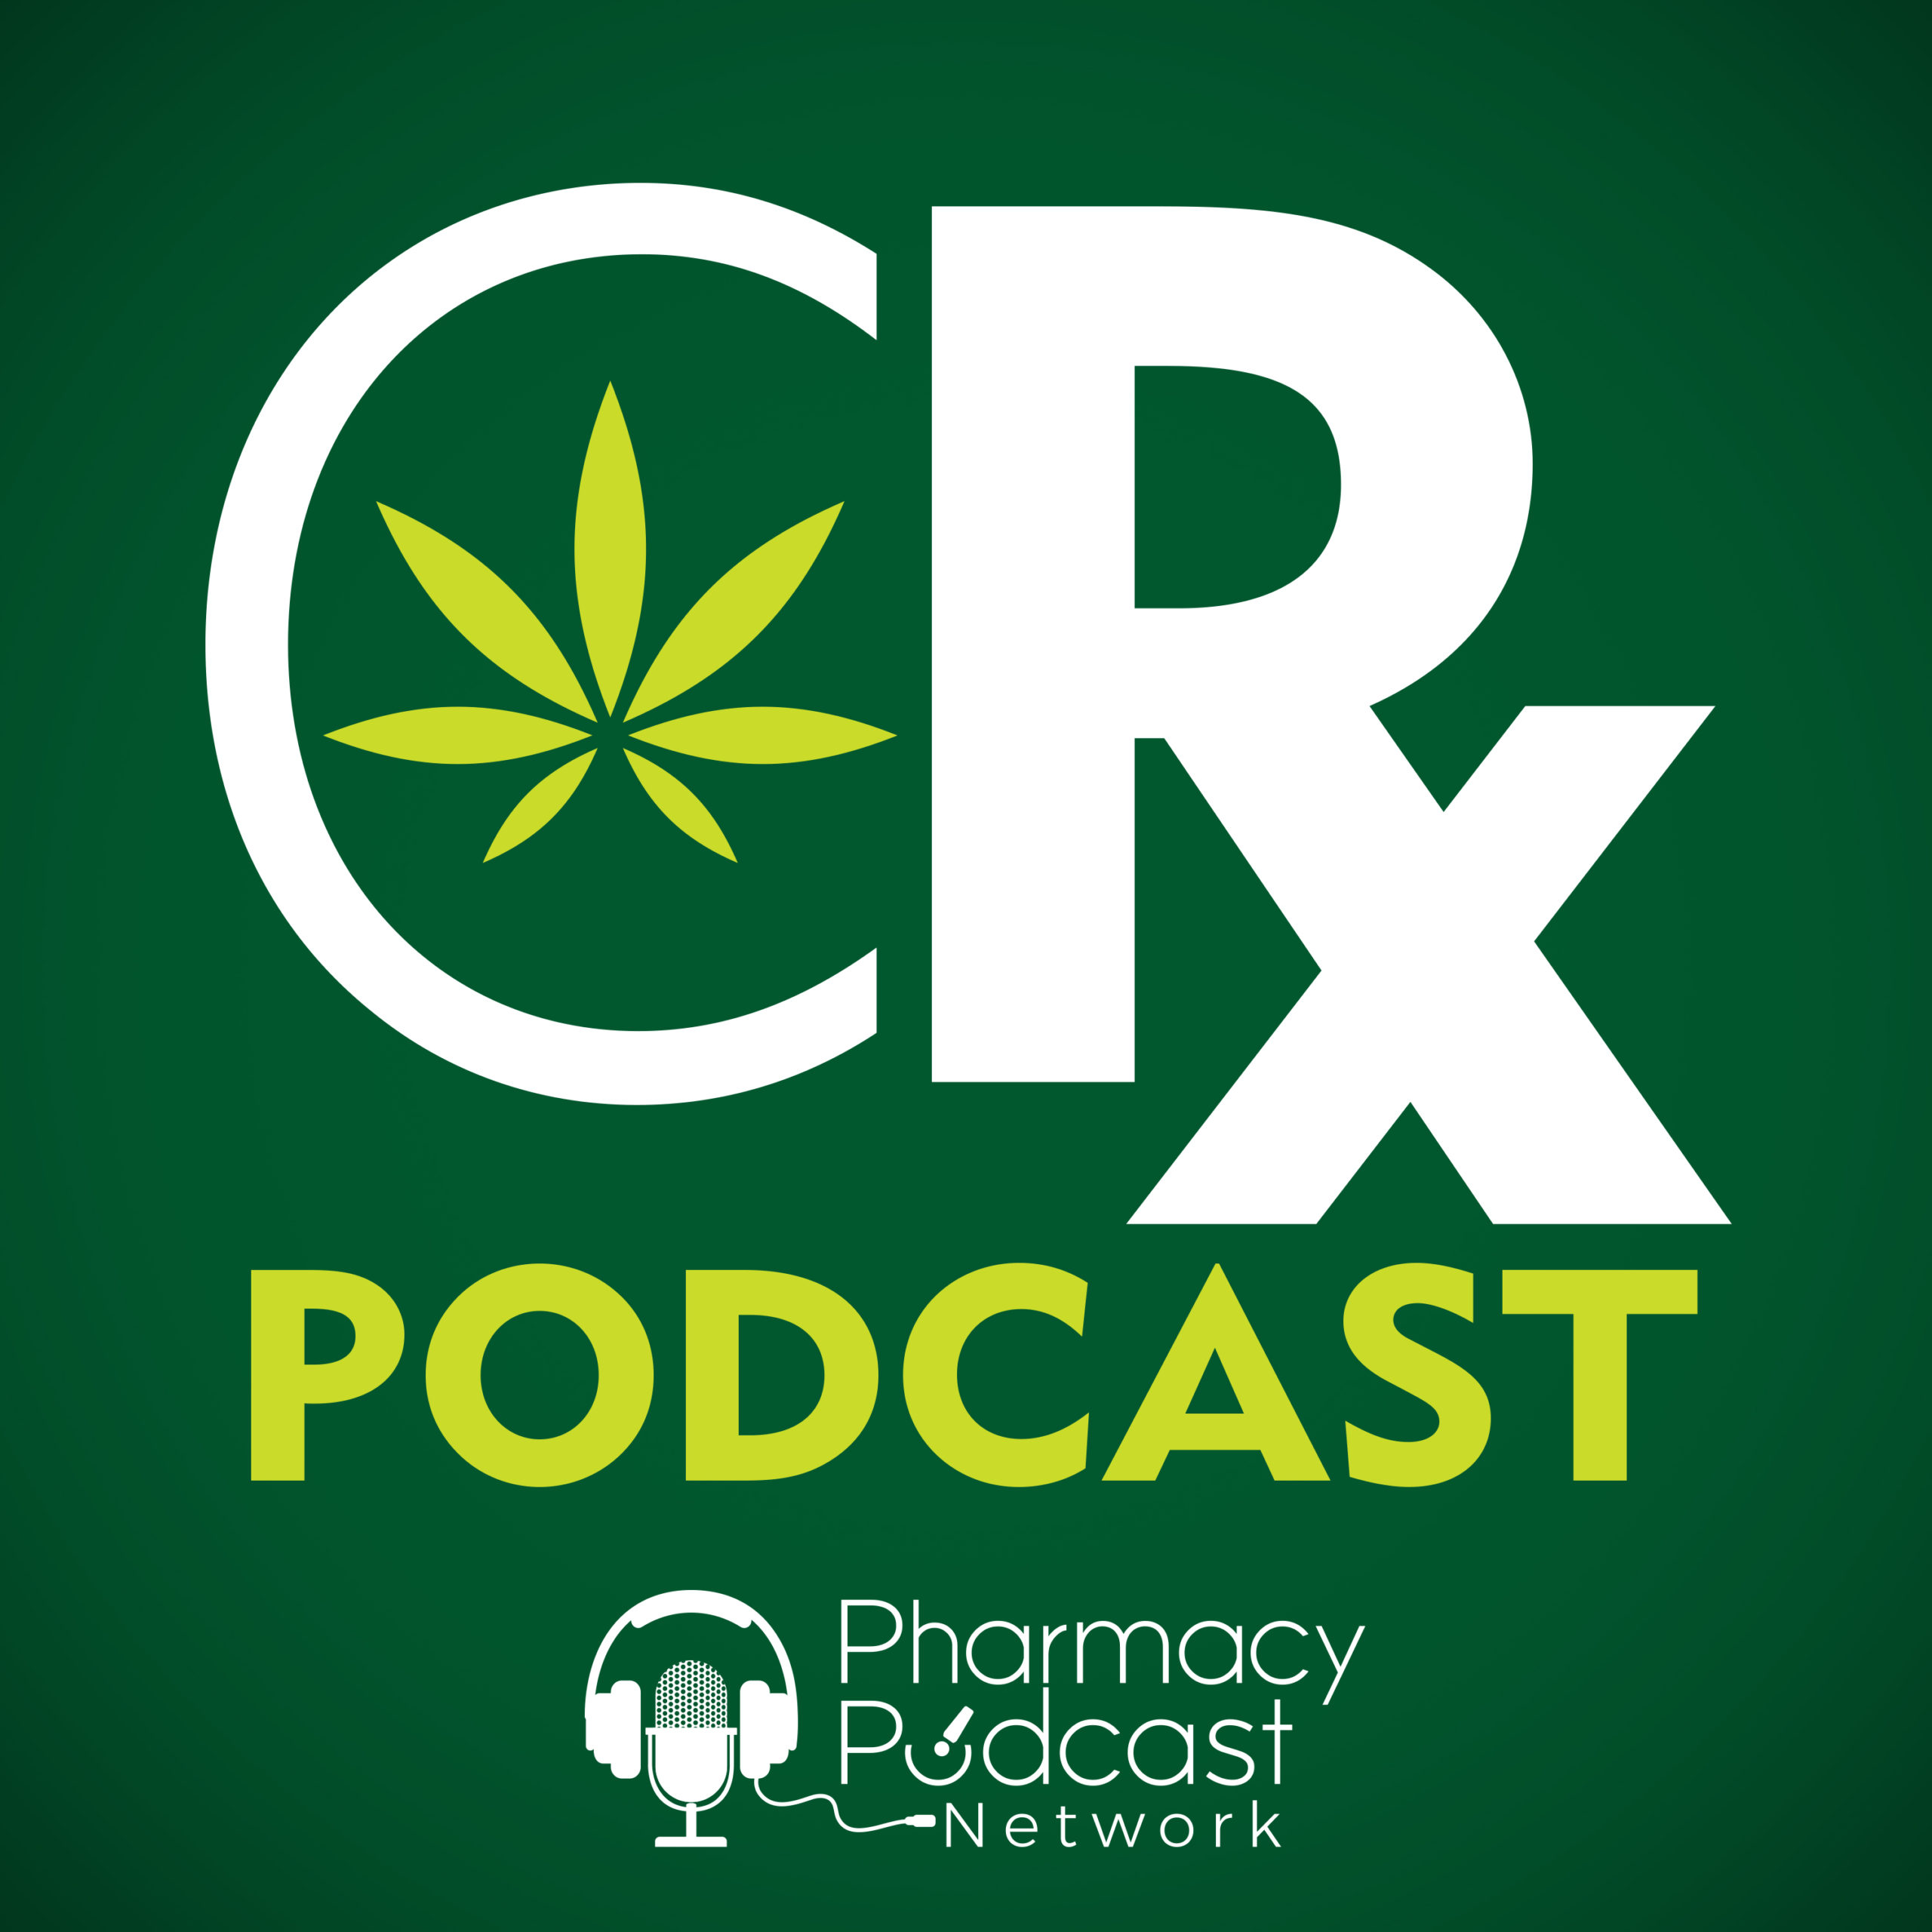 CRx Podcast